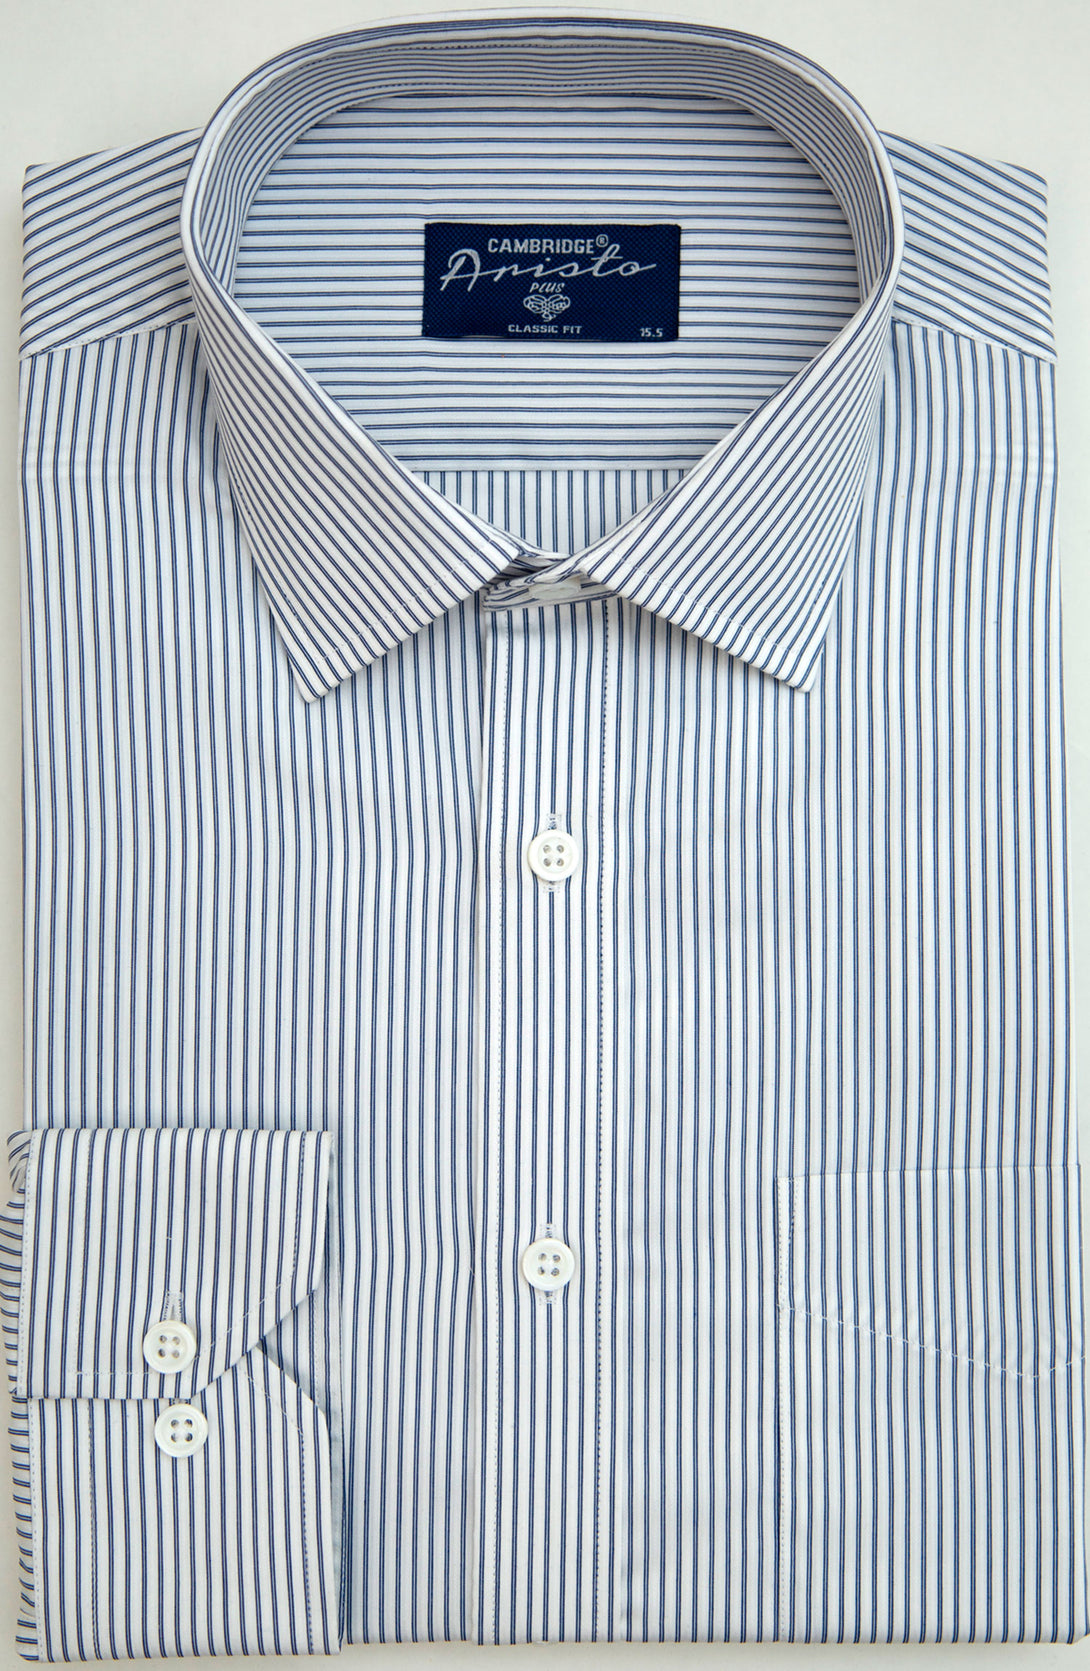 White/Navy Formal Shirt – Cambridge Shop